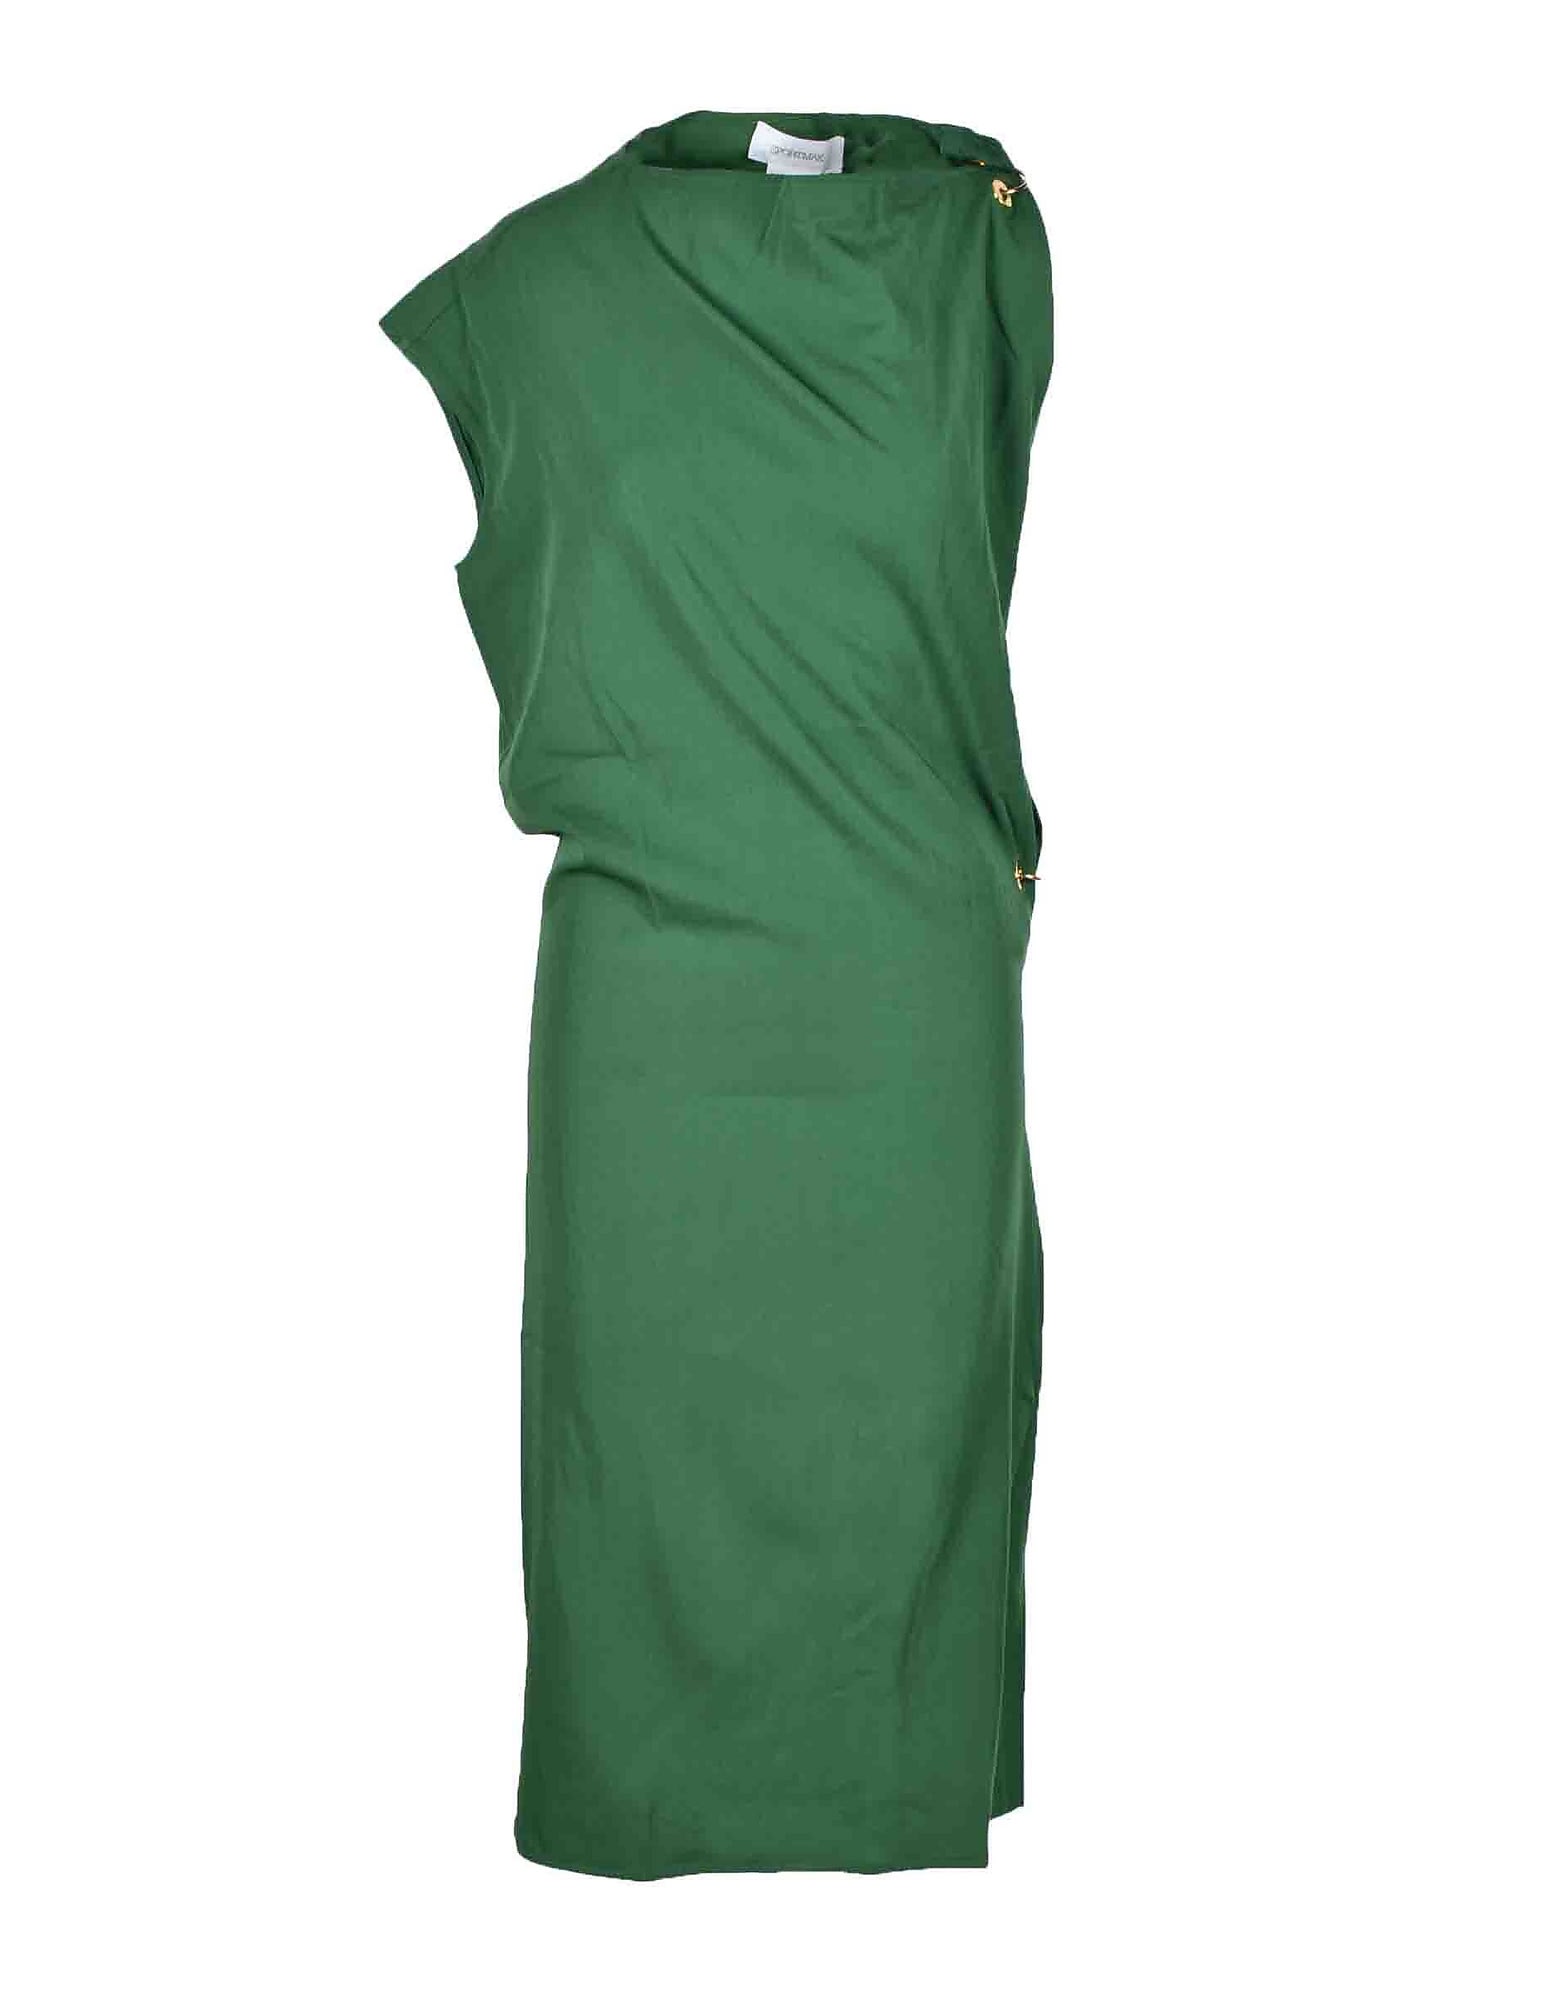 SportMax Womens Green Dress